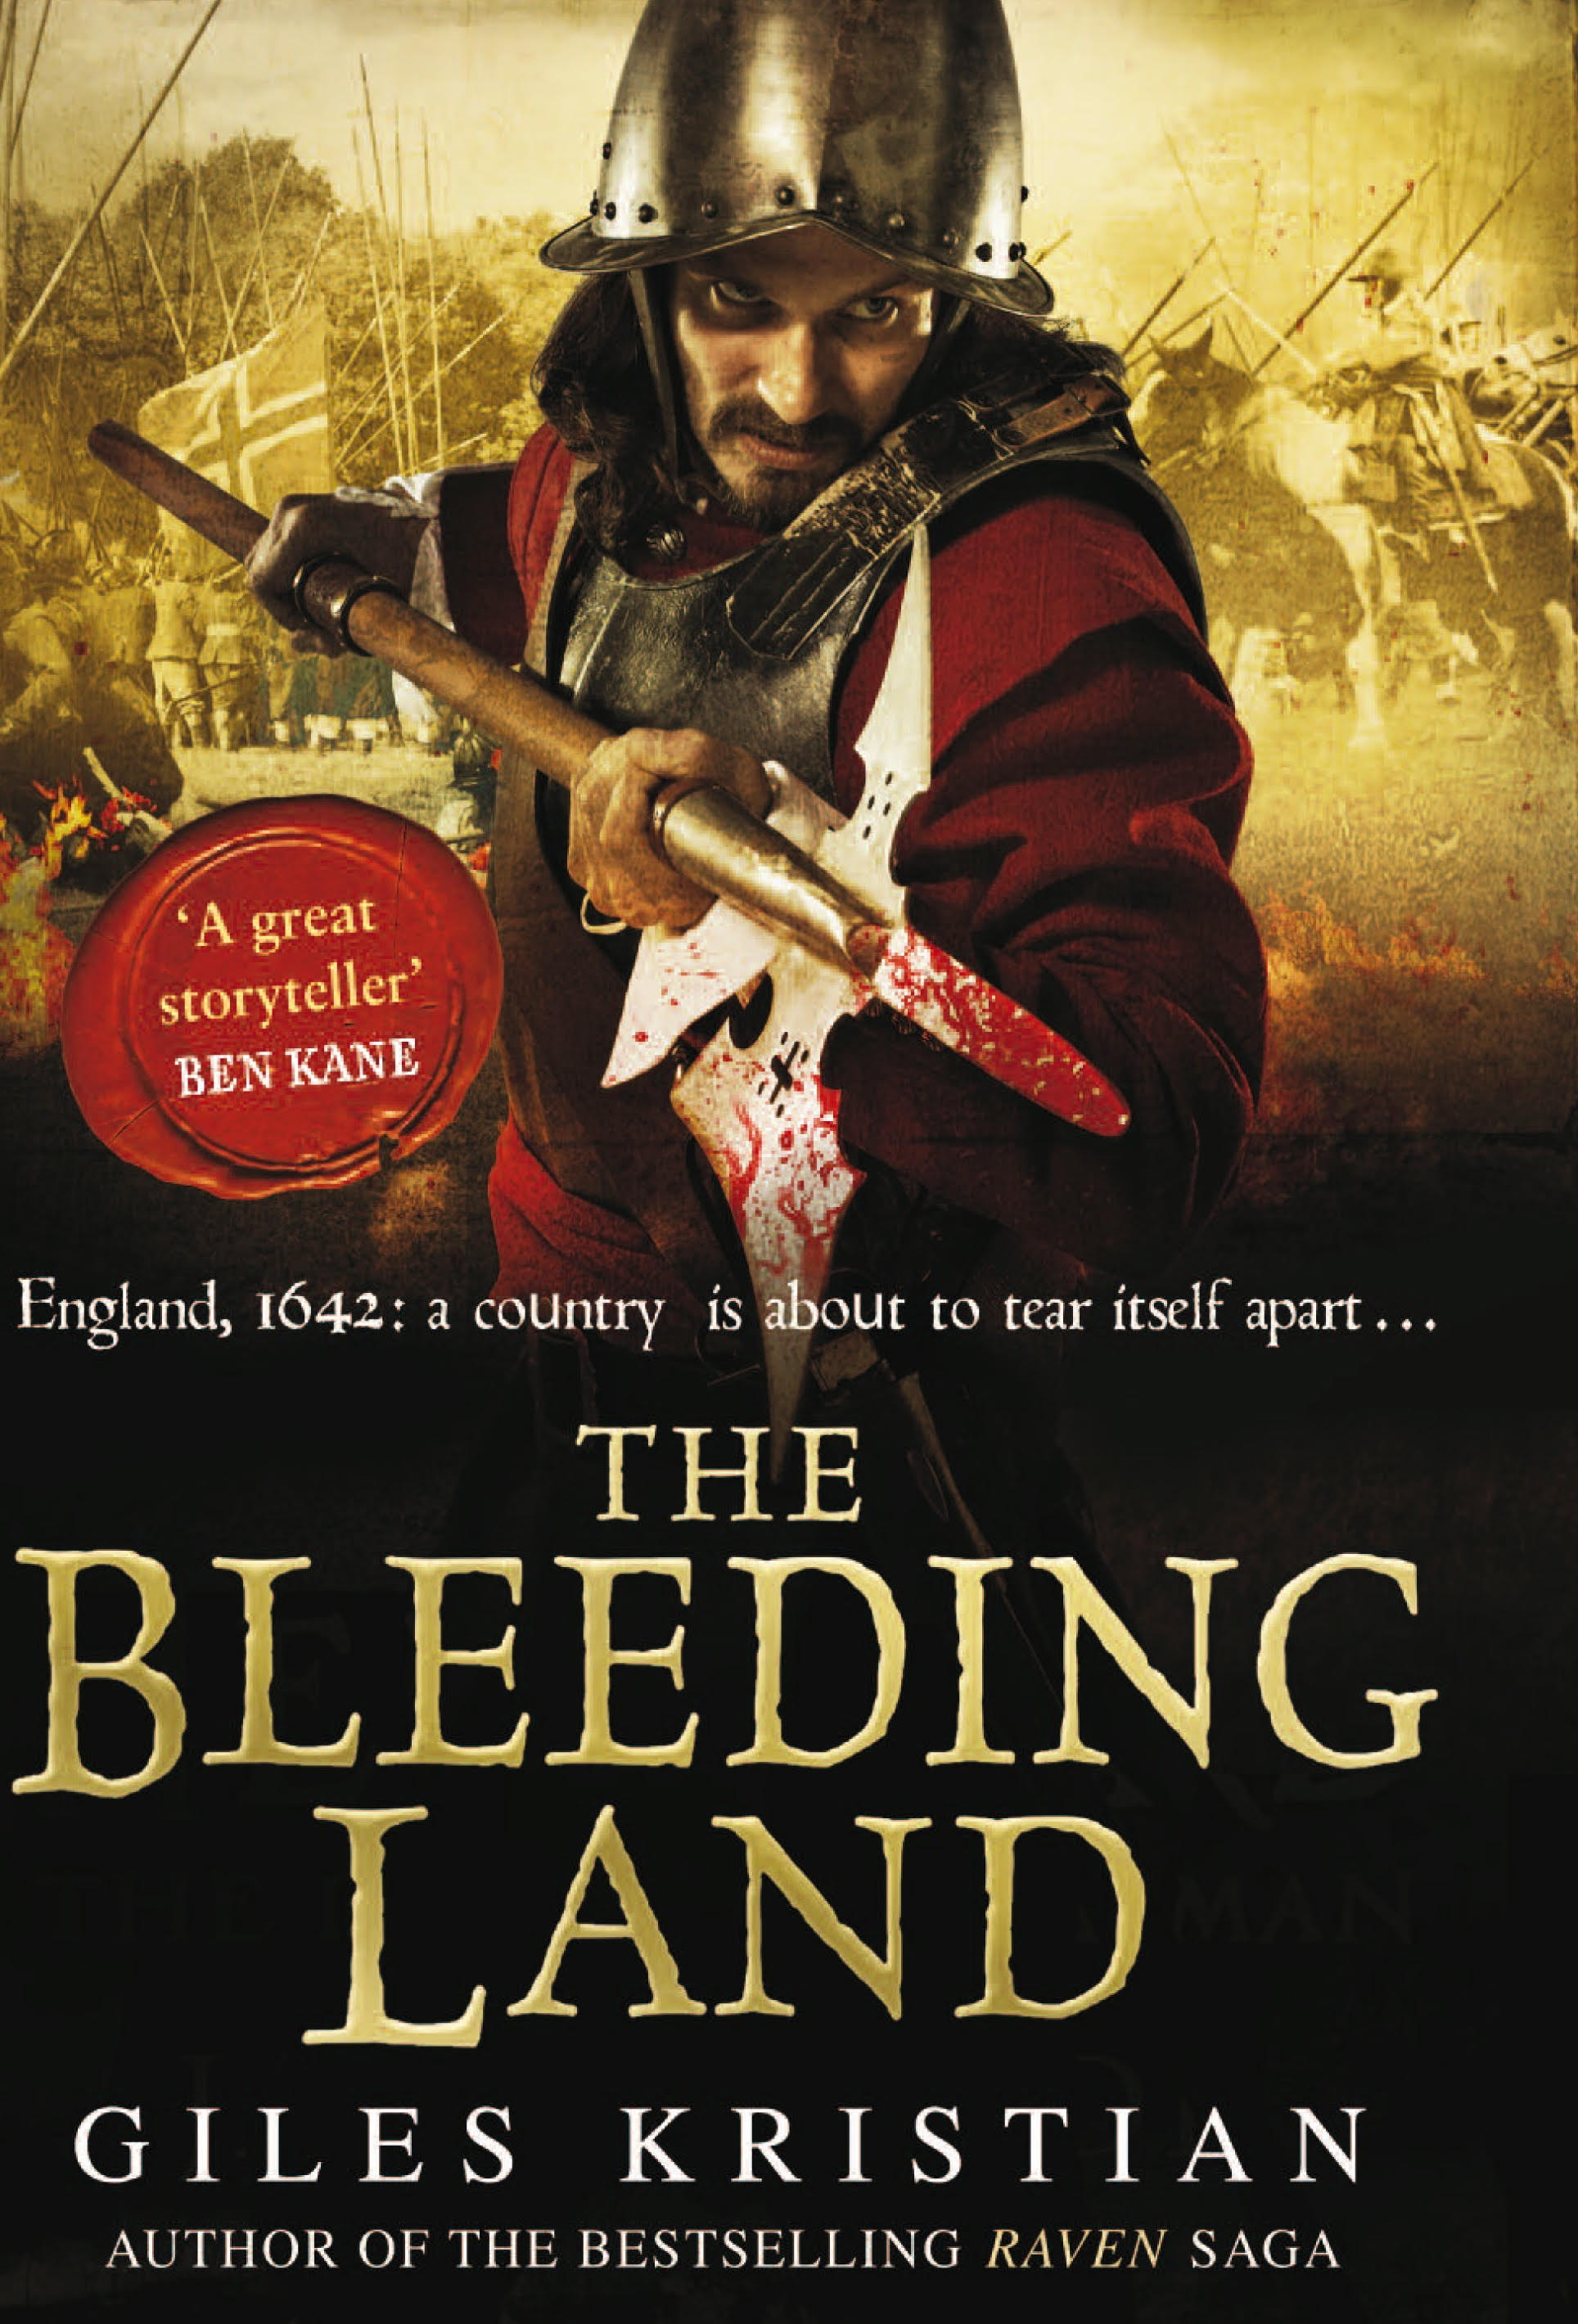 The Bleeding Land by Giles Kristian